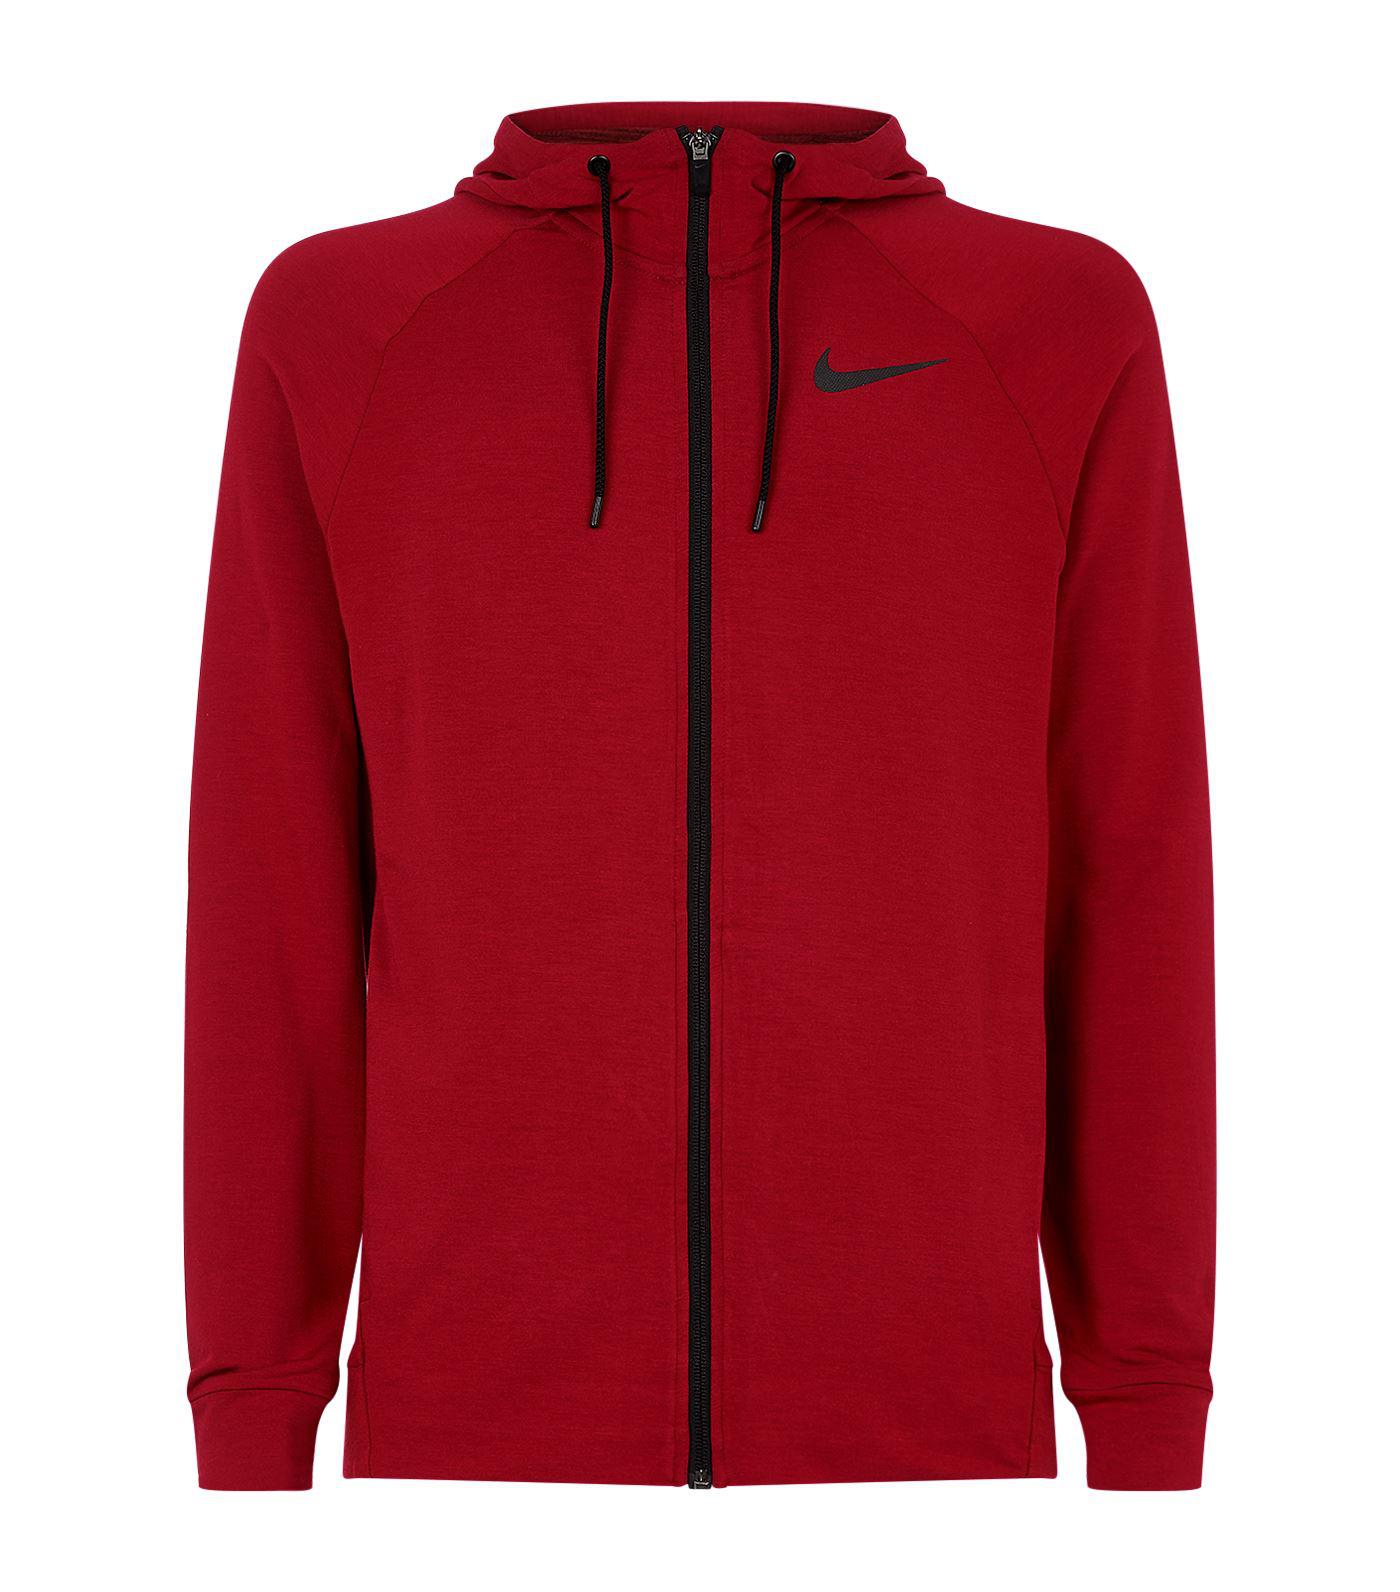 Nike Dri-fit Hoodie in Red for Men - Lyst